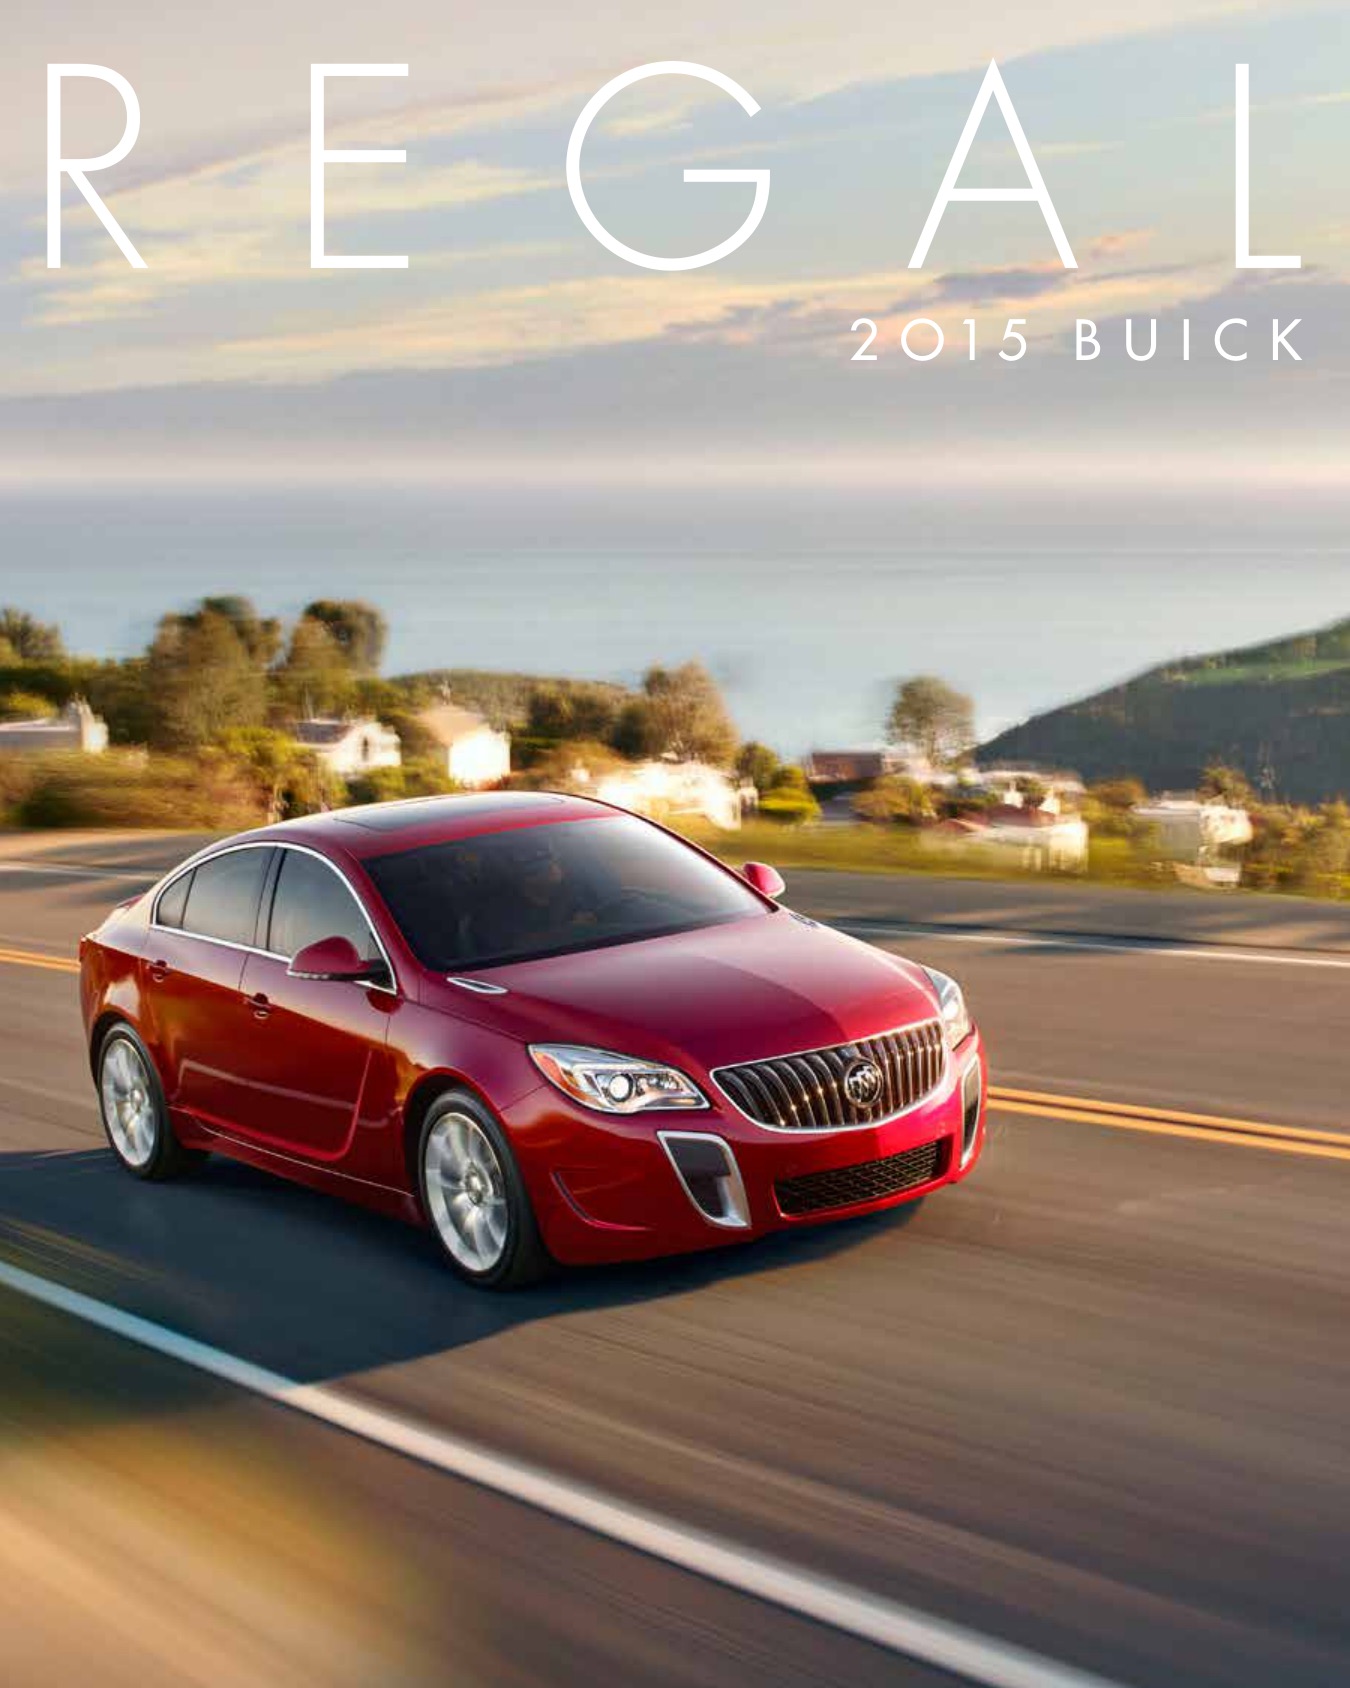 2015 Buick Regal Brochure